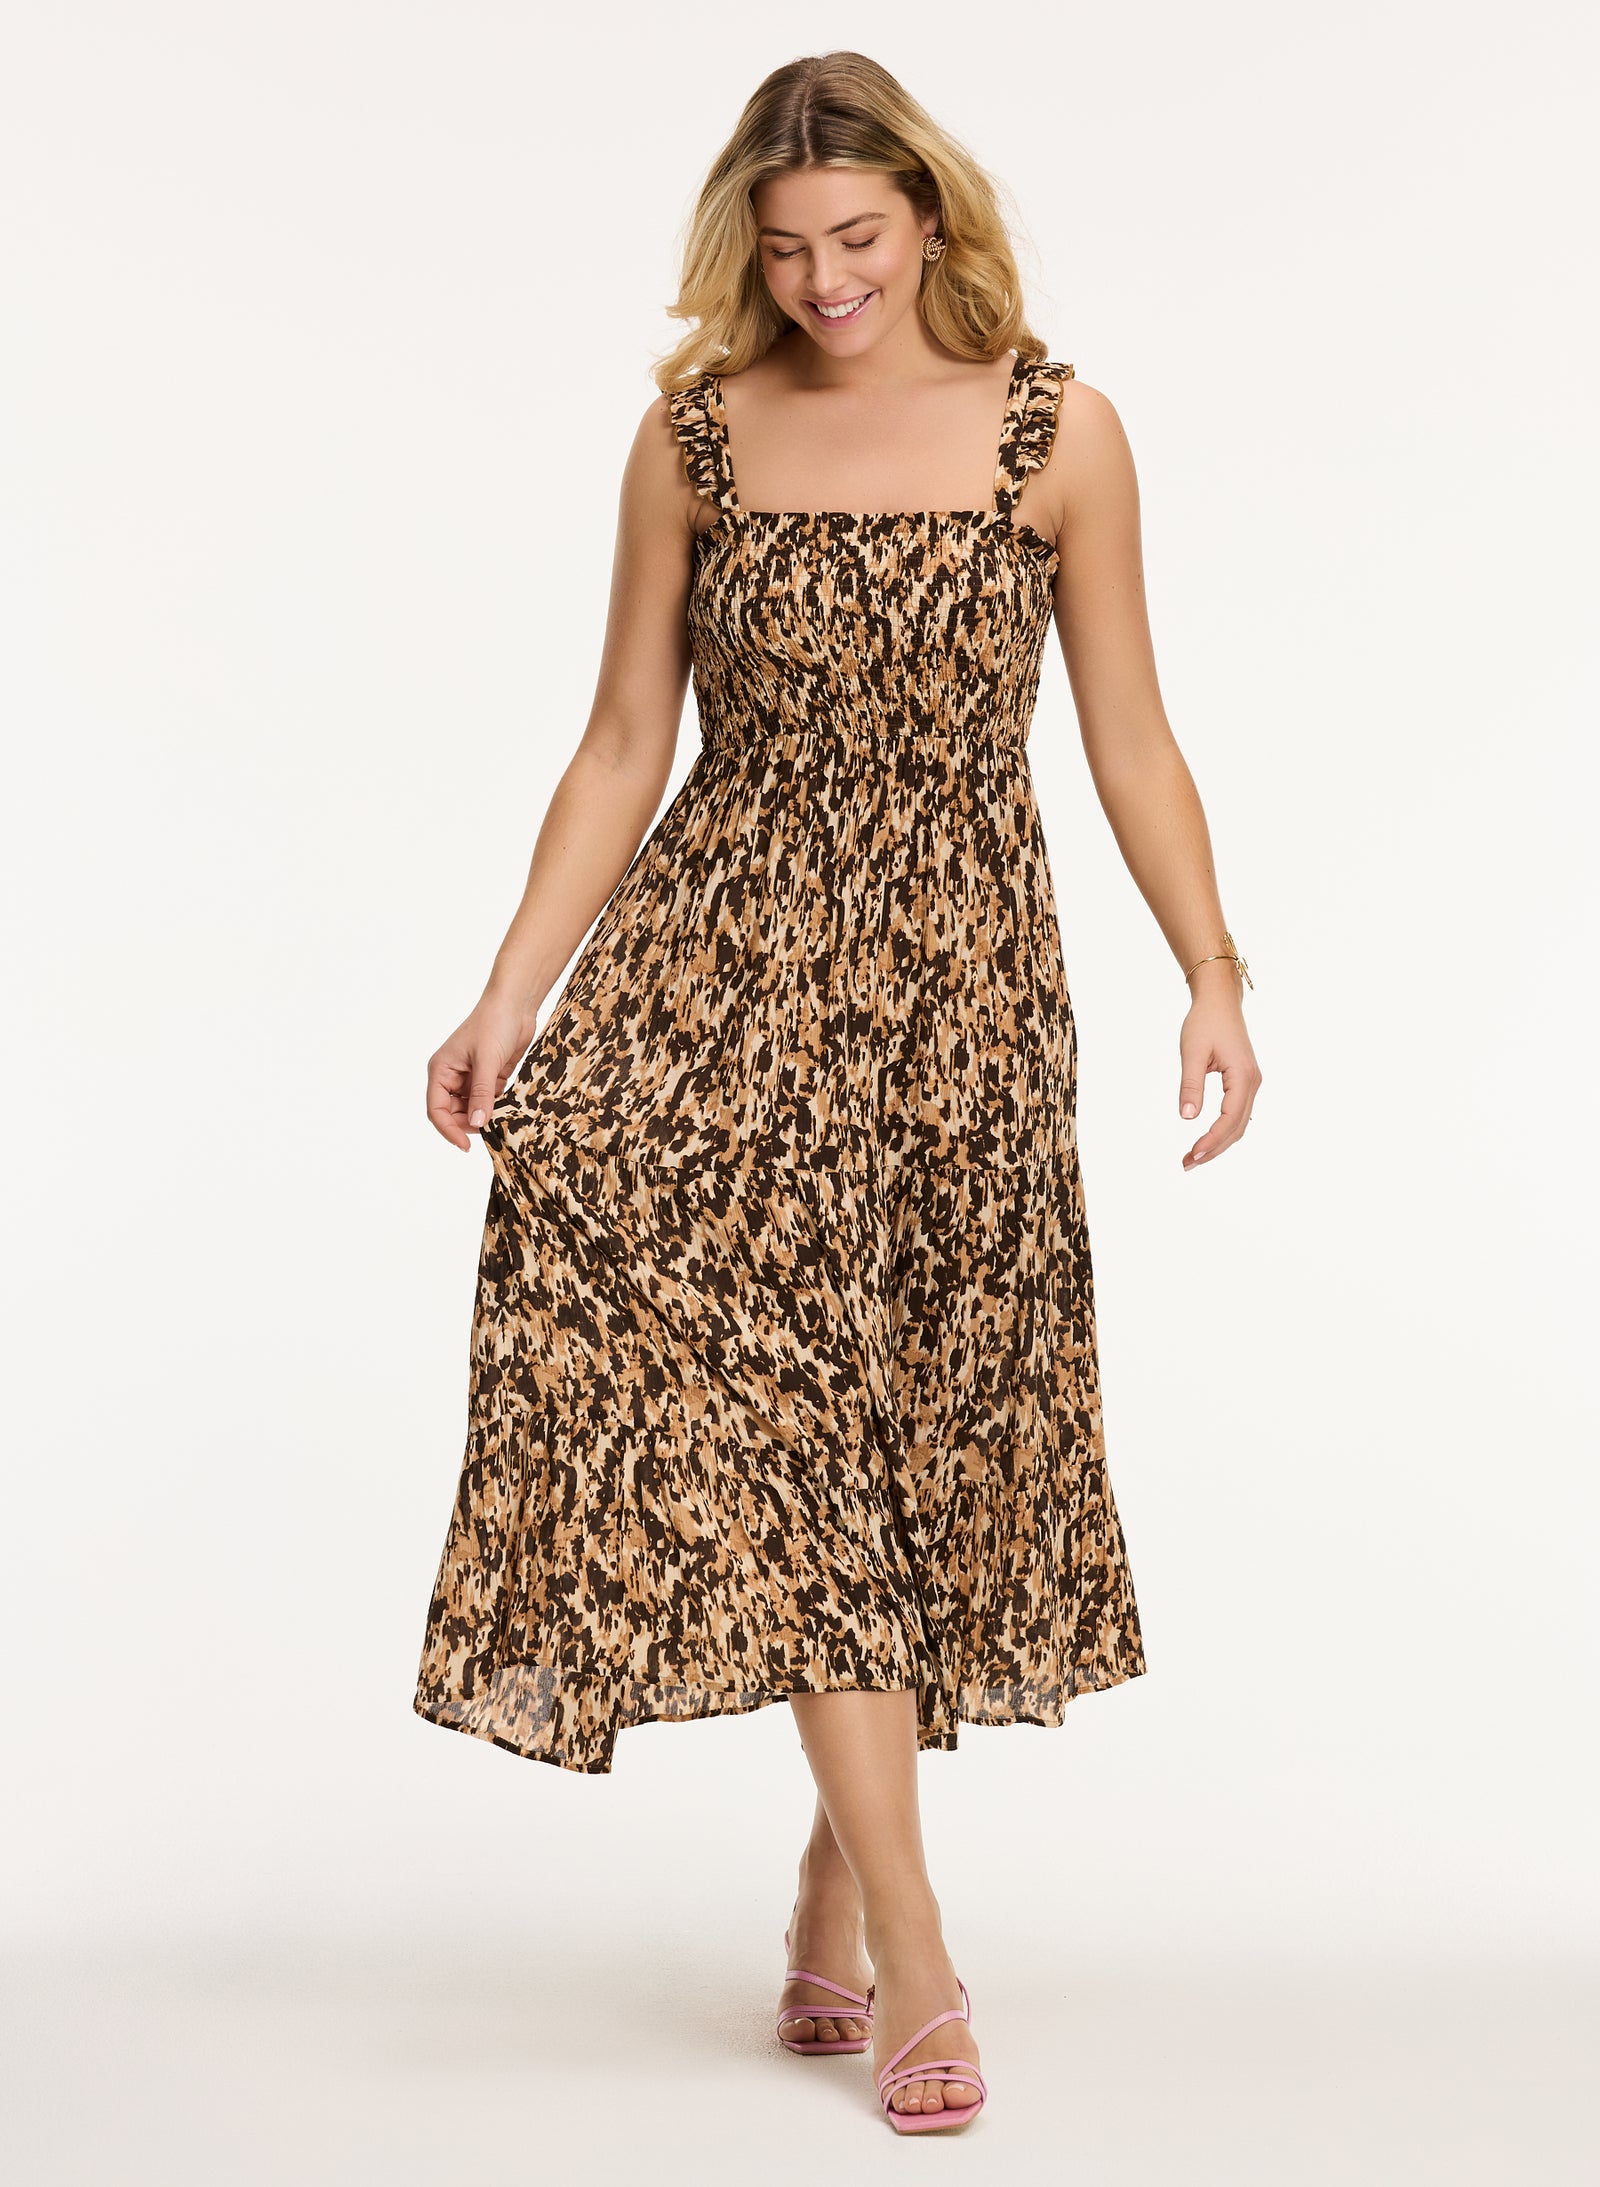 Ladies SEYCHELLES dress faded leopard